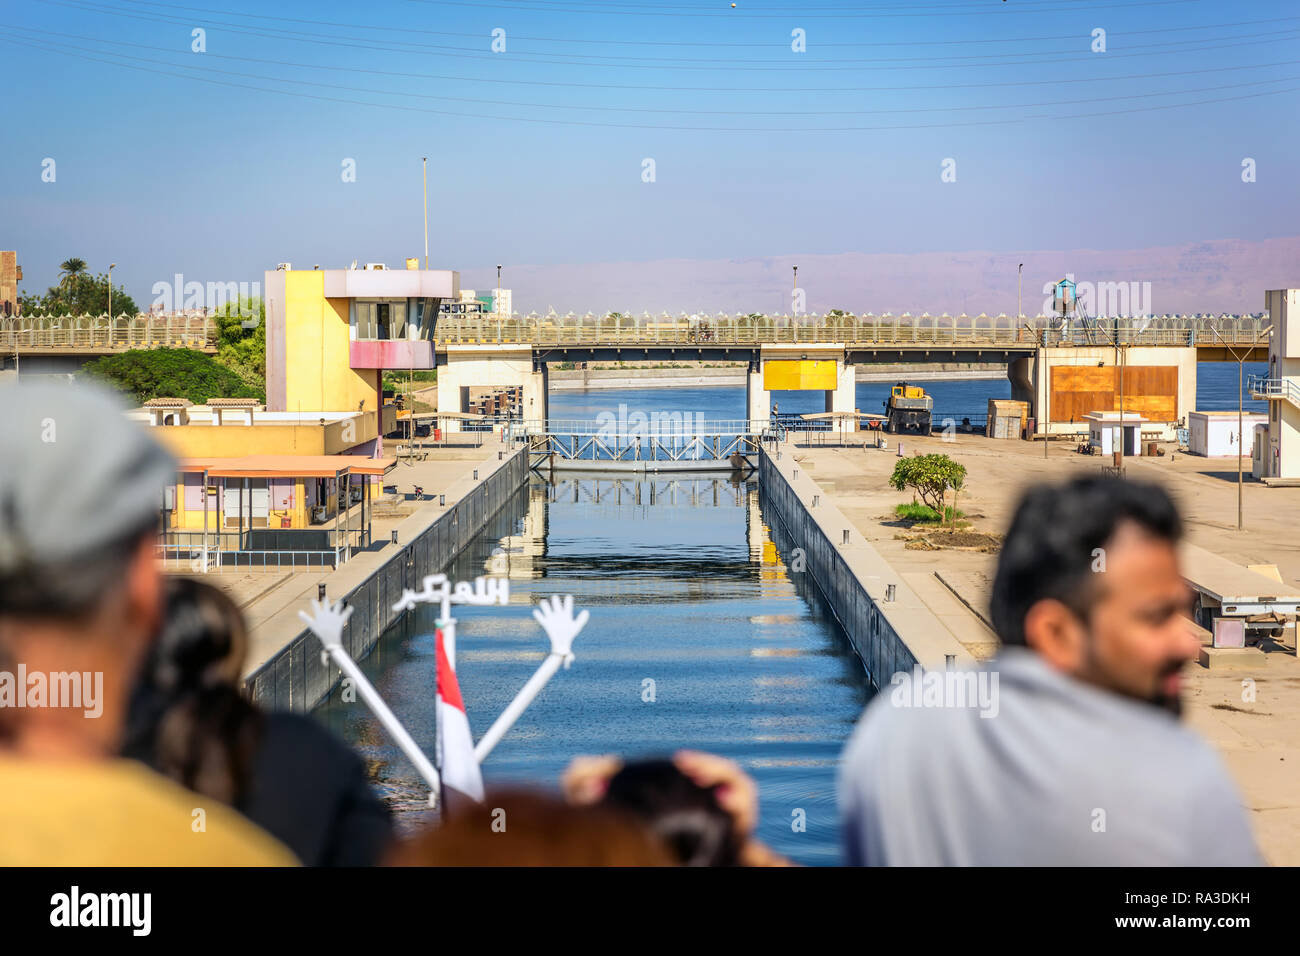 Nile river, Egypt - Nov 7th 2018 - Tourists having fun while the cruiser prepare to enter a lock in the Nile River in Egypt. Stock Photo